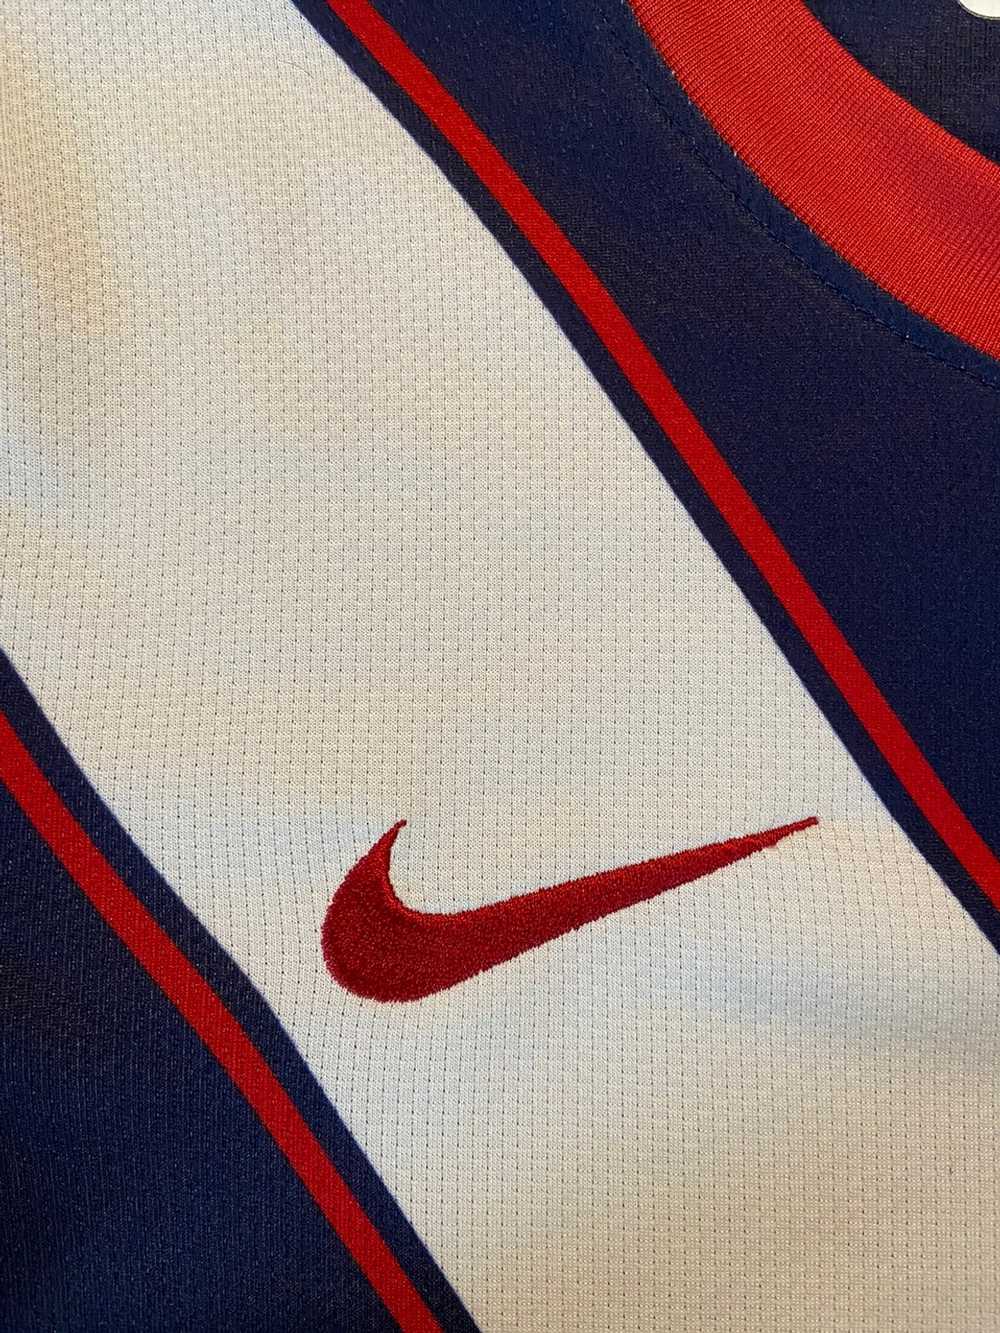 Nike USA Mens Soccer Jersey - image 3